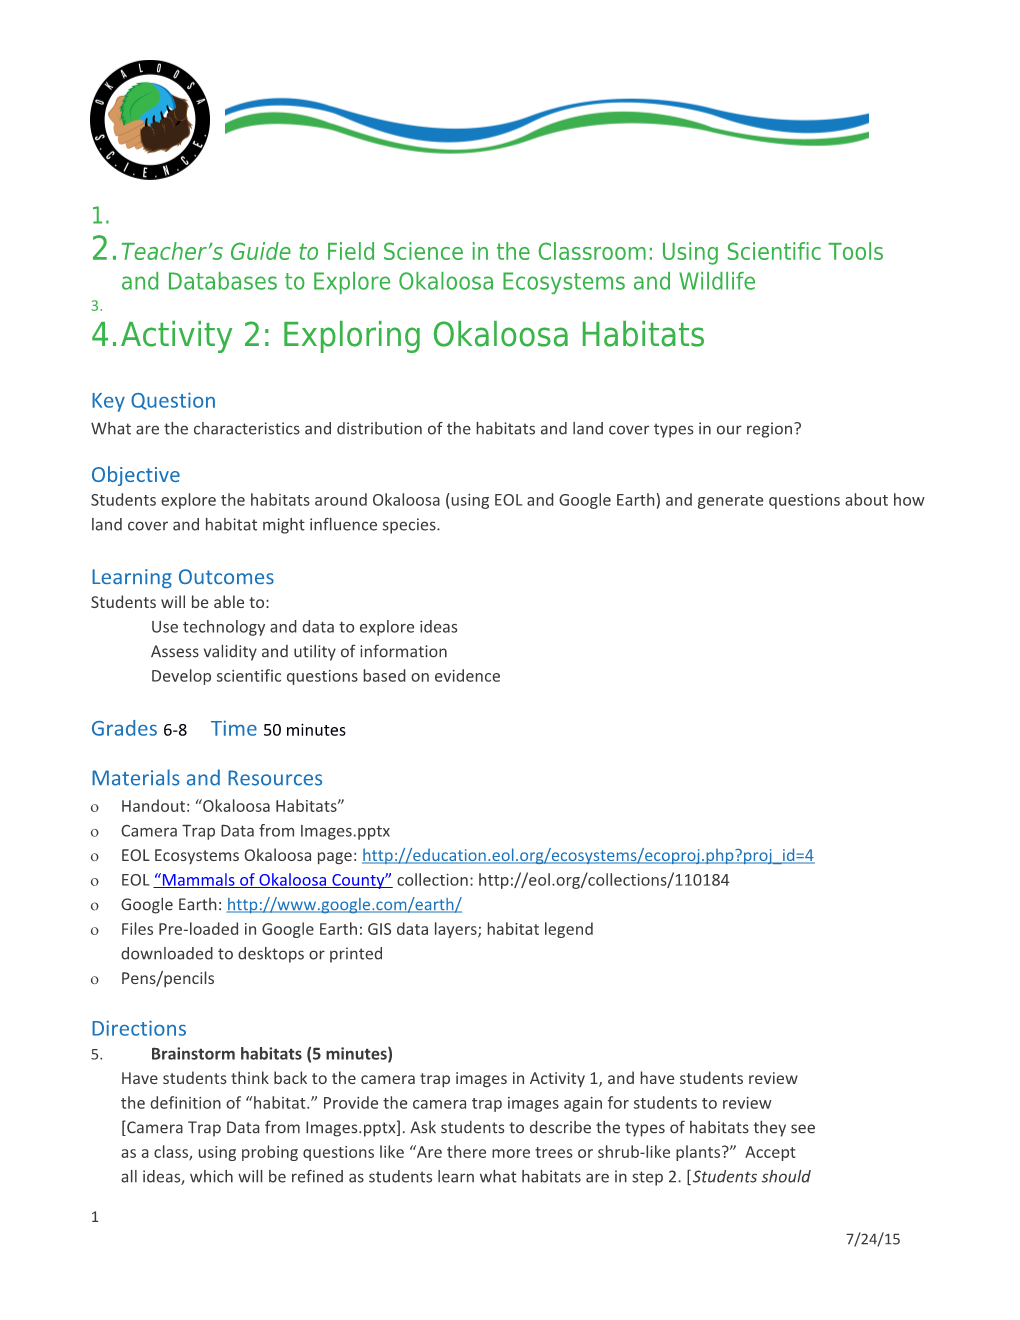 Activity 2: Exploring Okaloosa Habitats